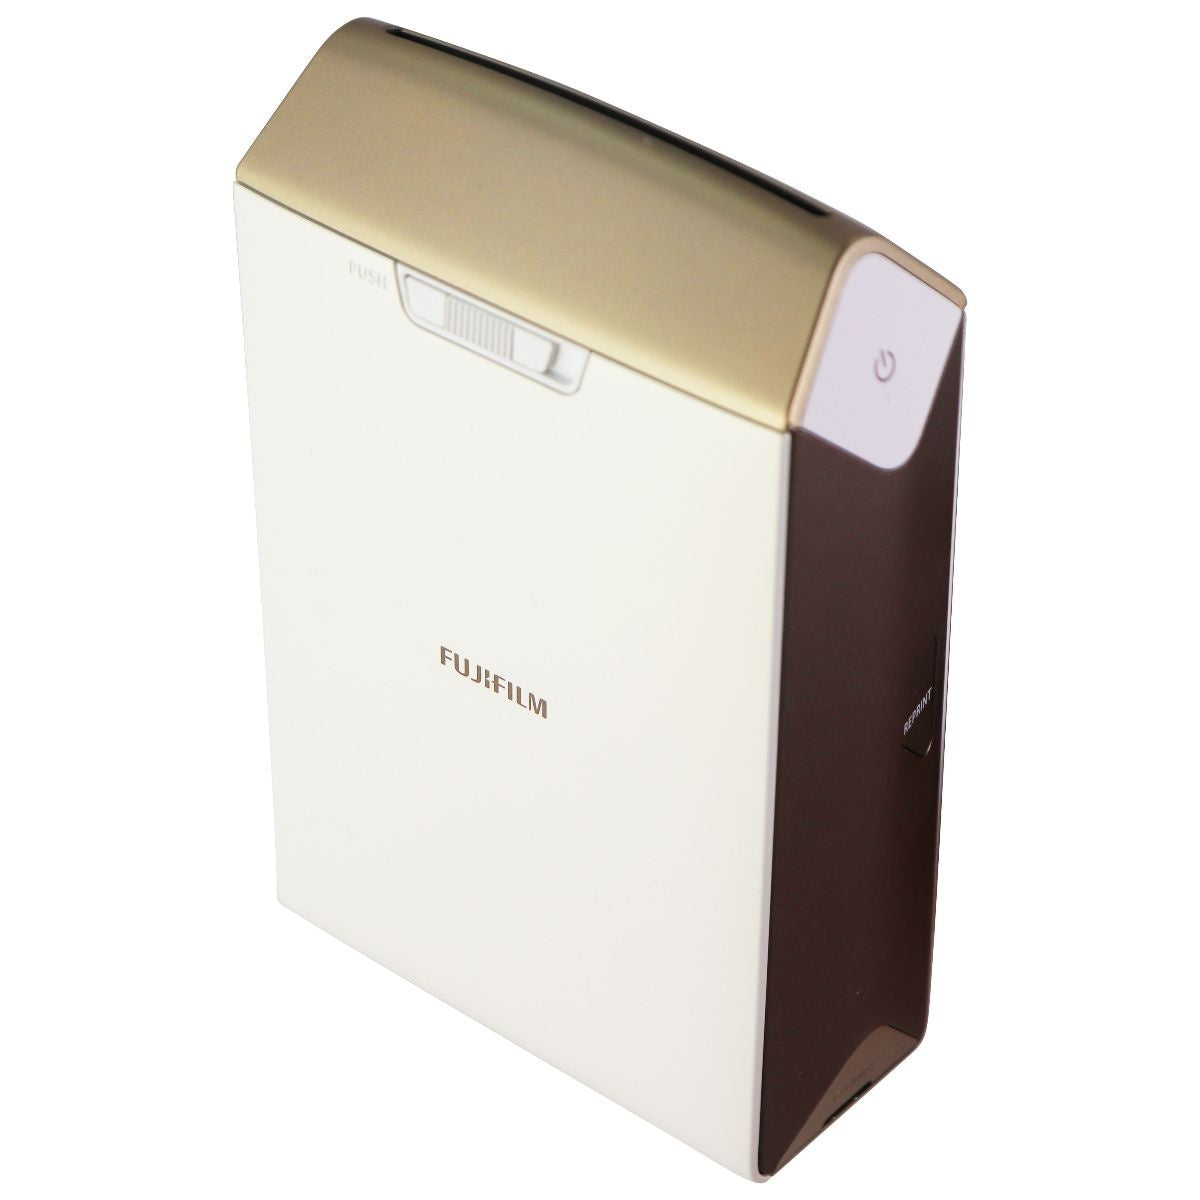 Fujifilm INSTAX Share SP-2 Mobile Printer - (Gold) Office Equipment - Printers Fujifilm    - Simple Cell Bulk Wholesale Pricing - USA Seller